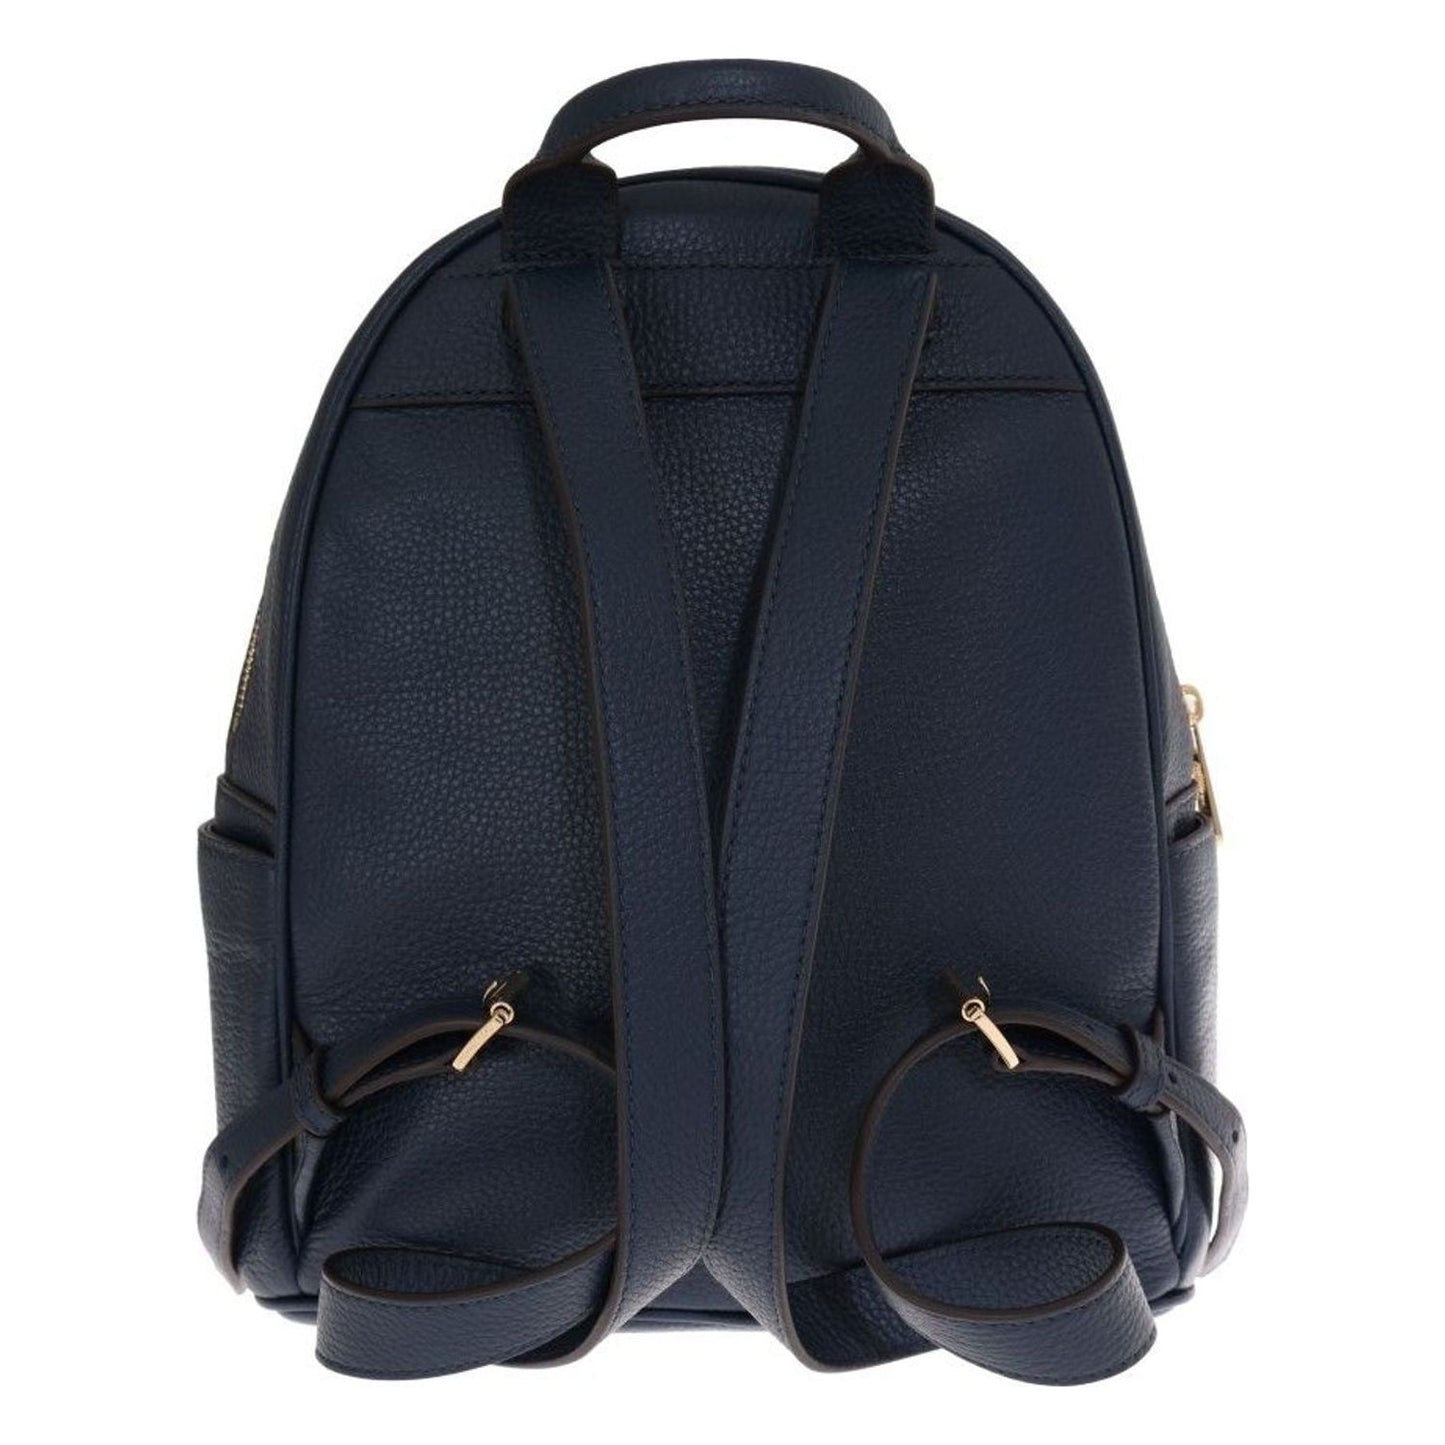 Michael Kors Elegant Leather ABBEY Backpack in Navy Blue WOMAN BACKPACK navy-blue-abbey-leather-backpack-bag